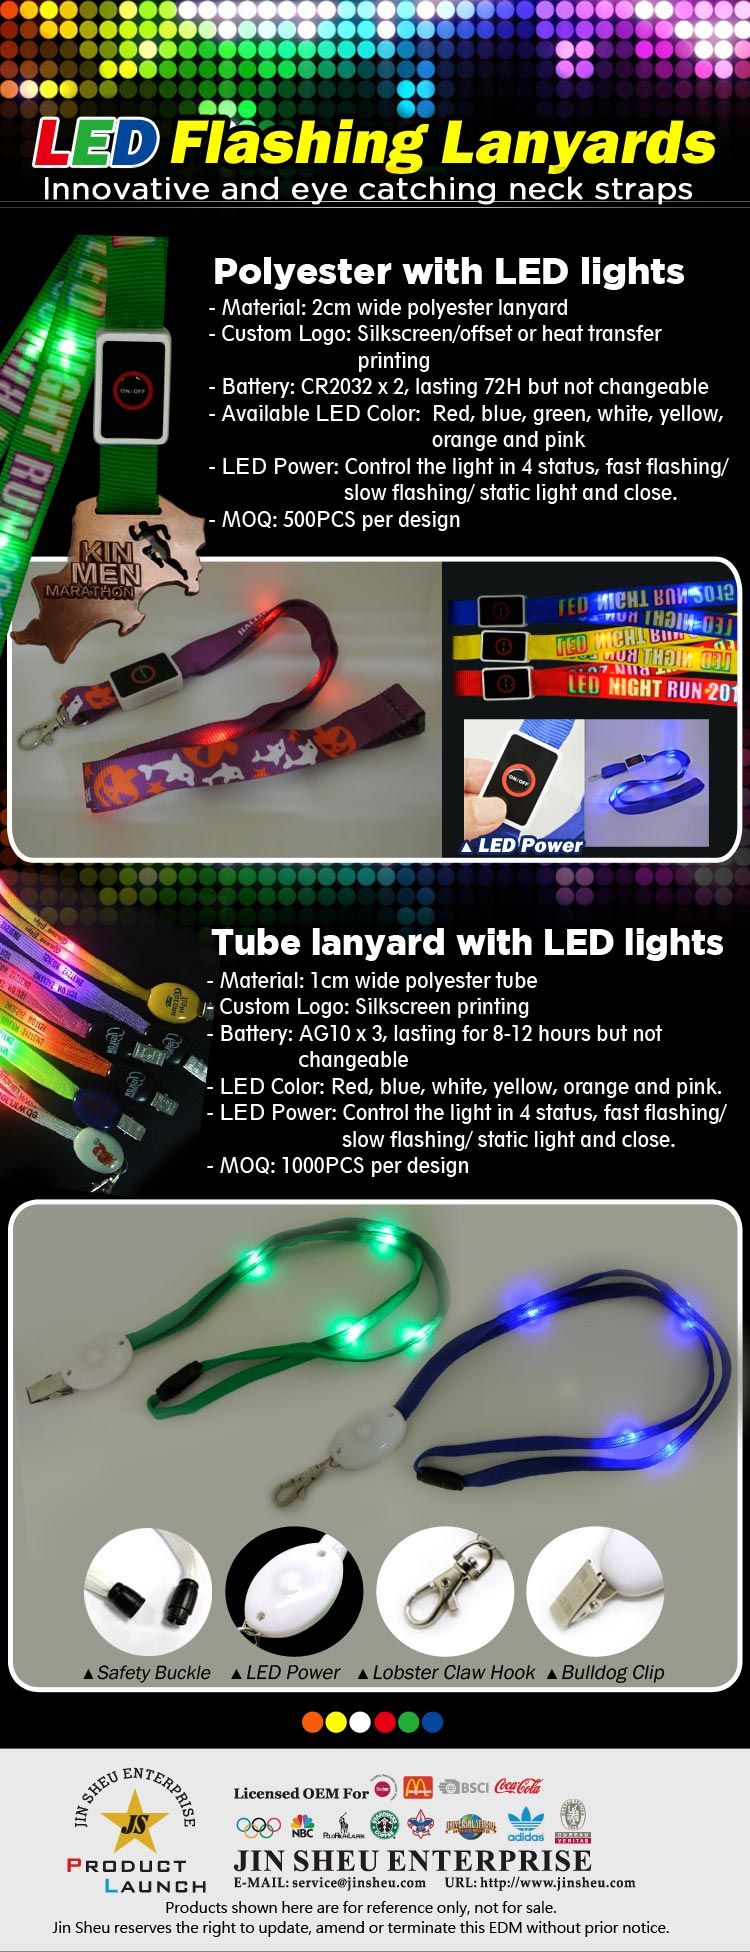 Cinturini luminosi a LED innovativi e accattivanti